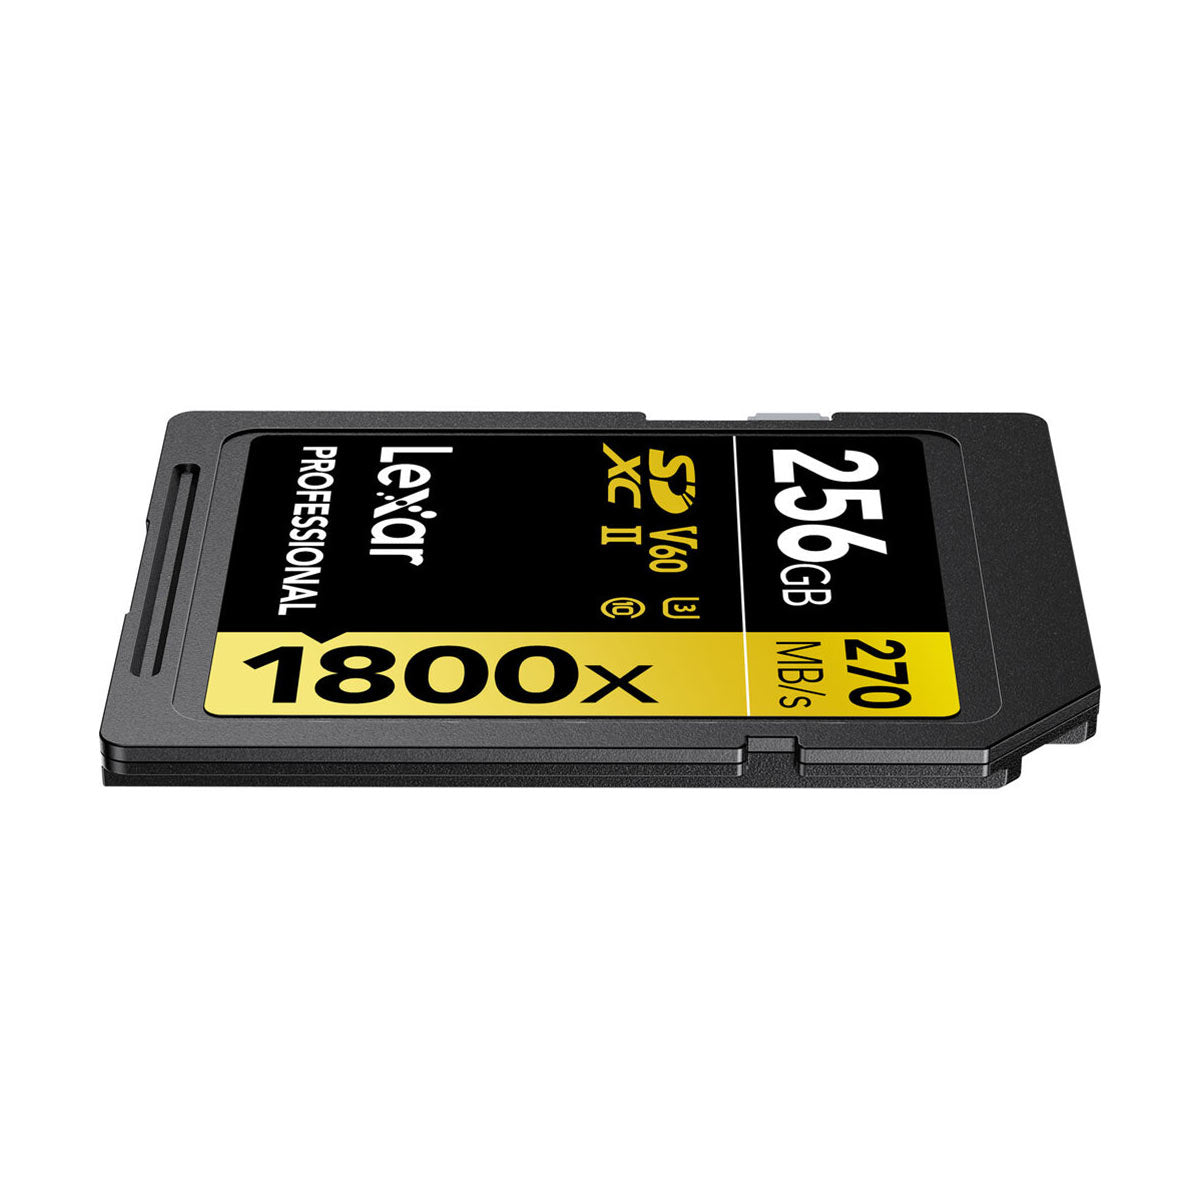 Lexar 256GB Professional 1800x UHS-II V60 SDXC Memory Card